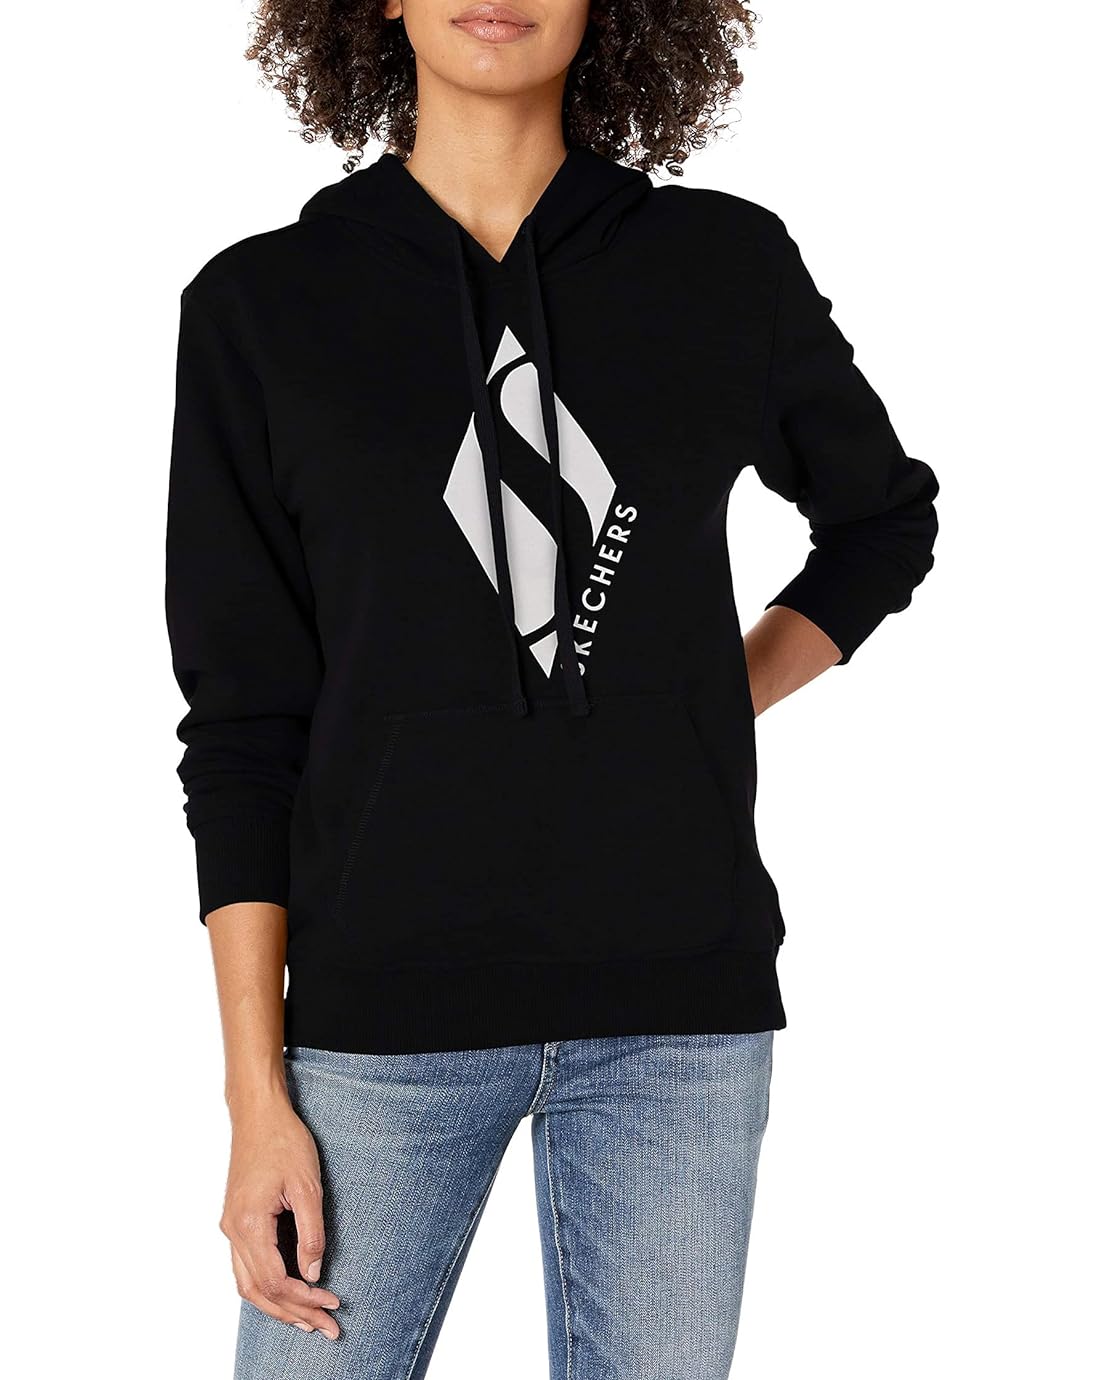 SKECHERS Womens Diamond Logo Pullover Hoodie Sweatshirt